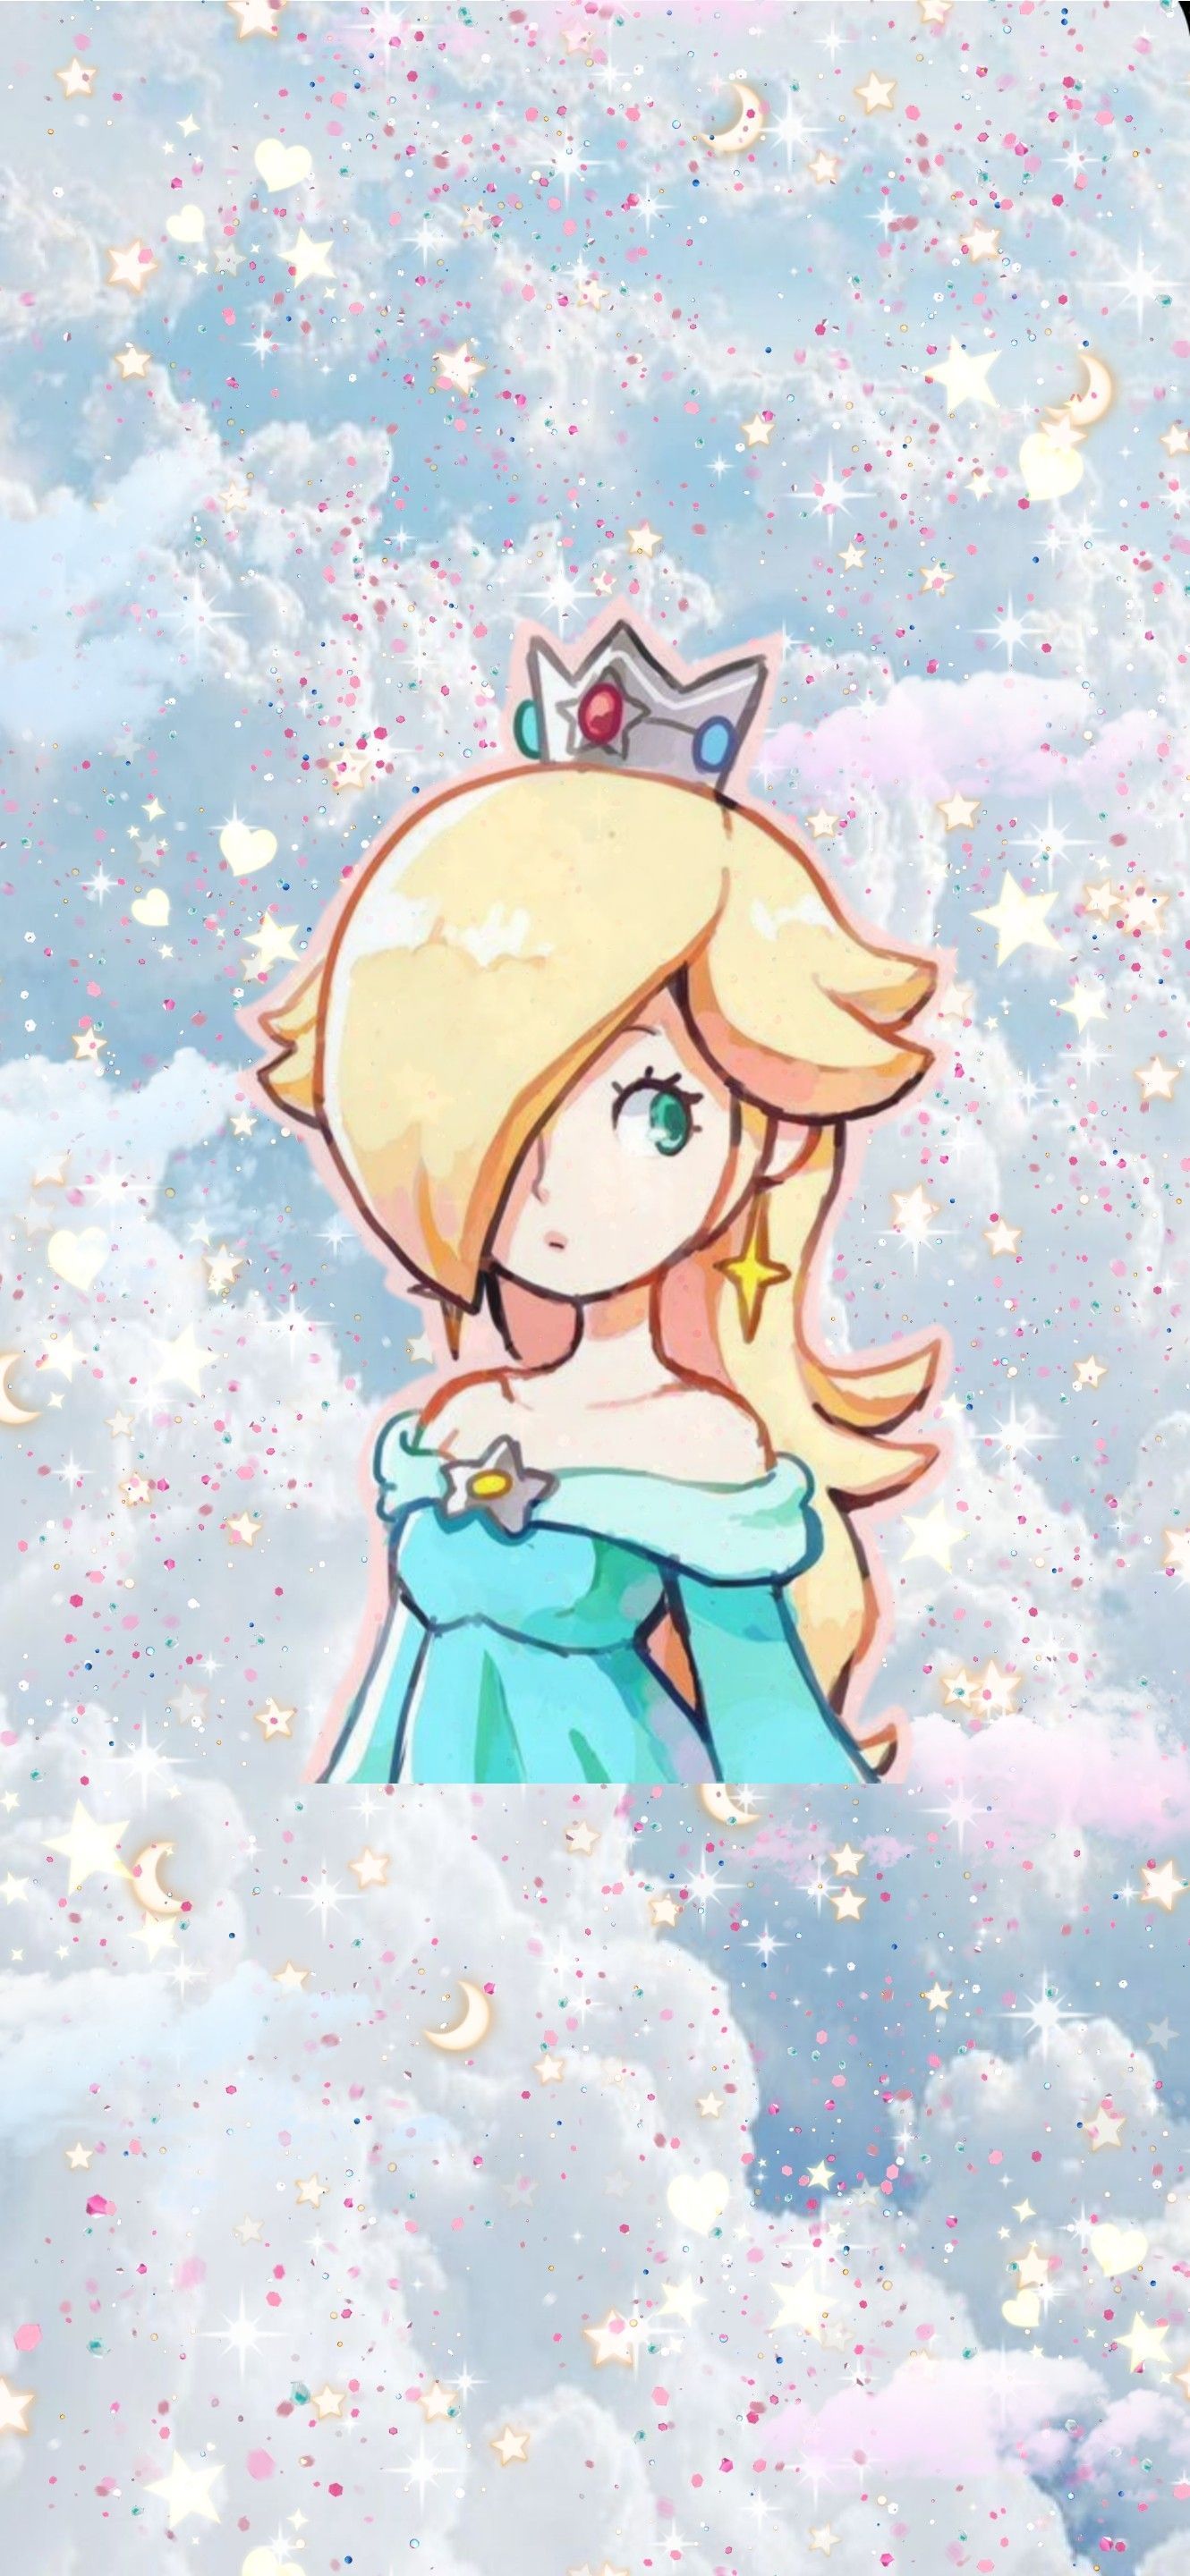 Nintendo Princess Rosalina blue aesthetic Phone Wallpaper. Cute wallpaper, Wallpaper, Nintendo princess